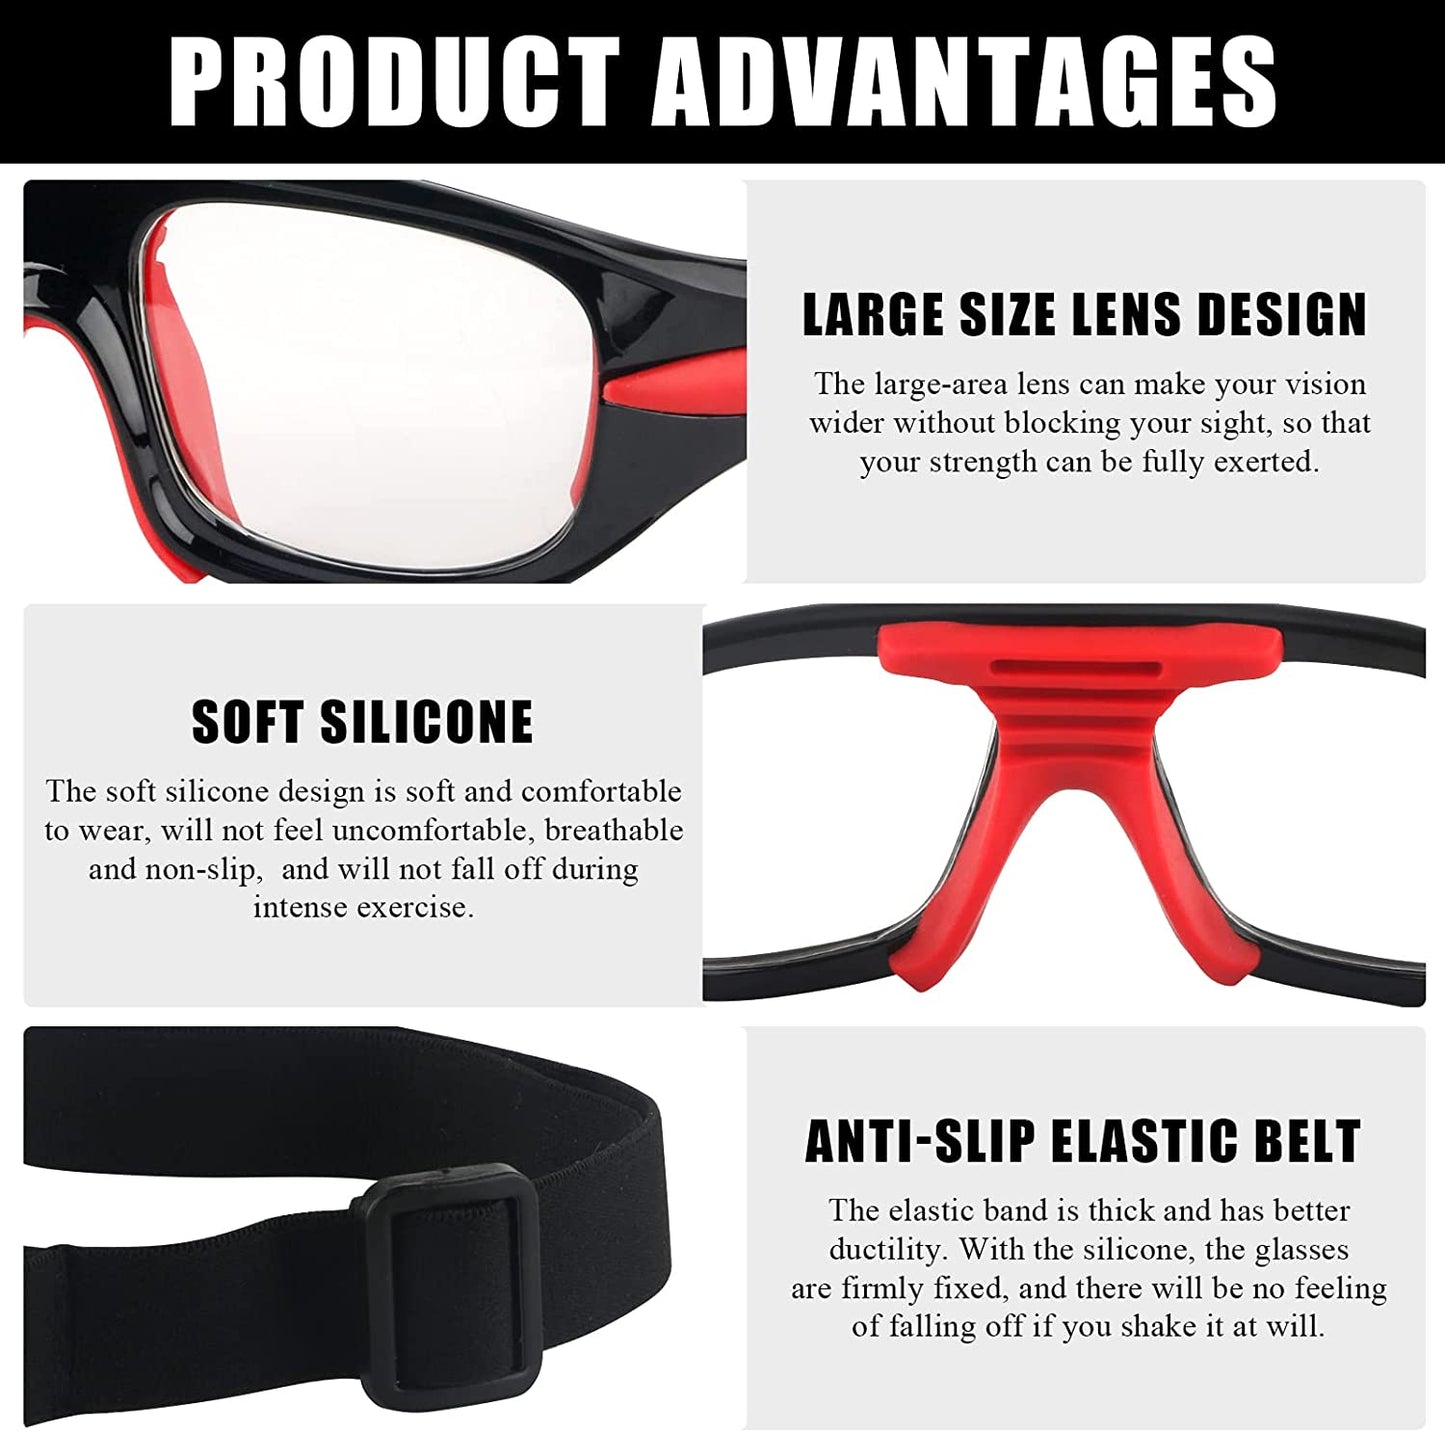 Prescription Sports Sunglasses with Adjustable Strap Black Product Advantages